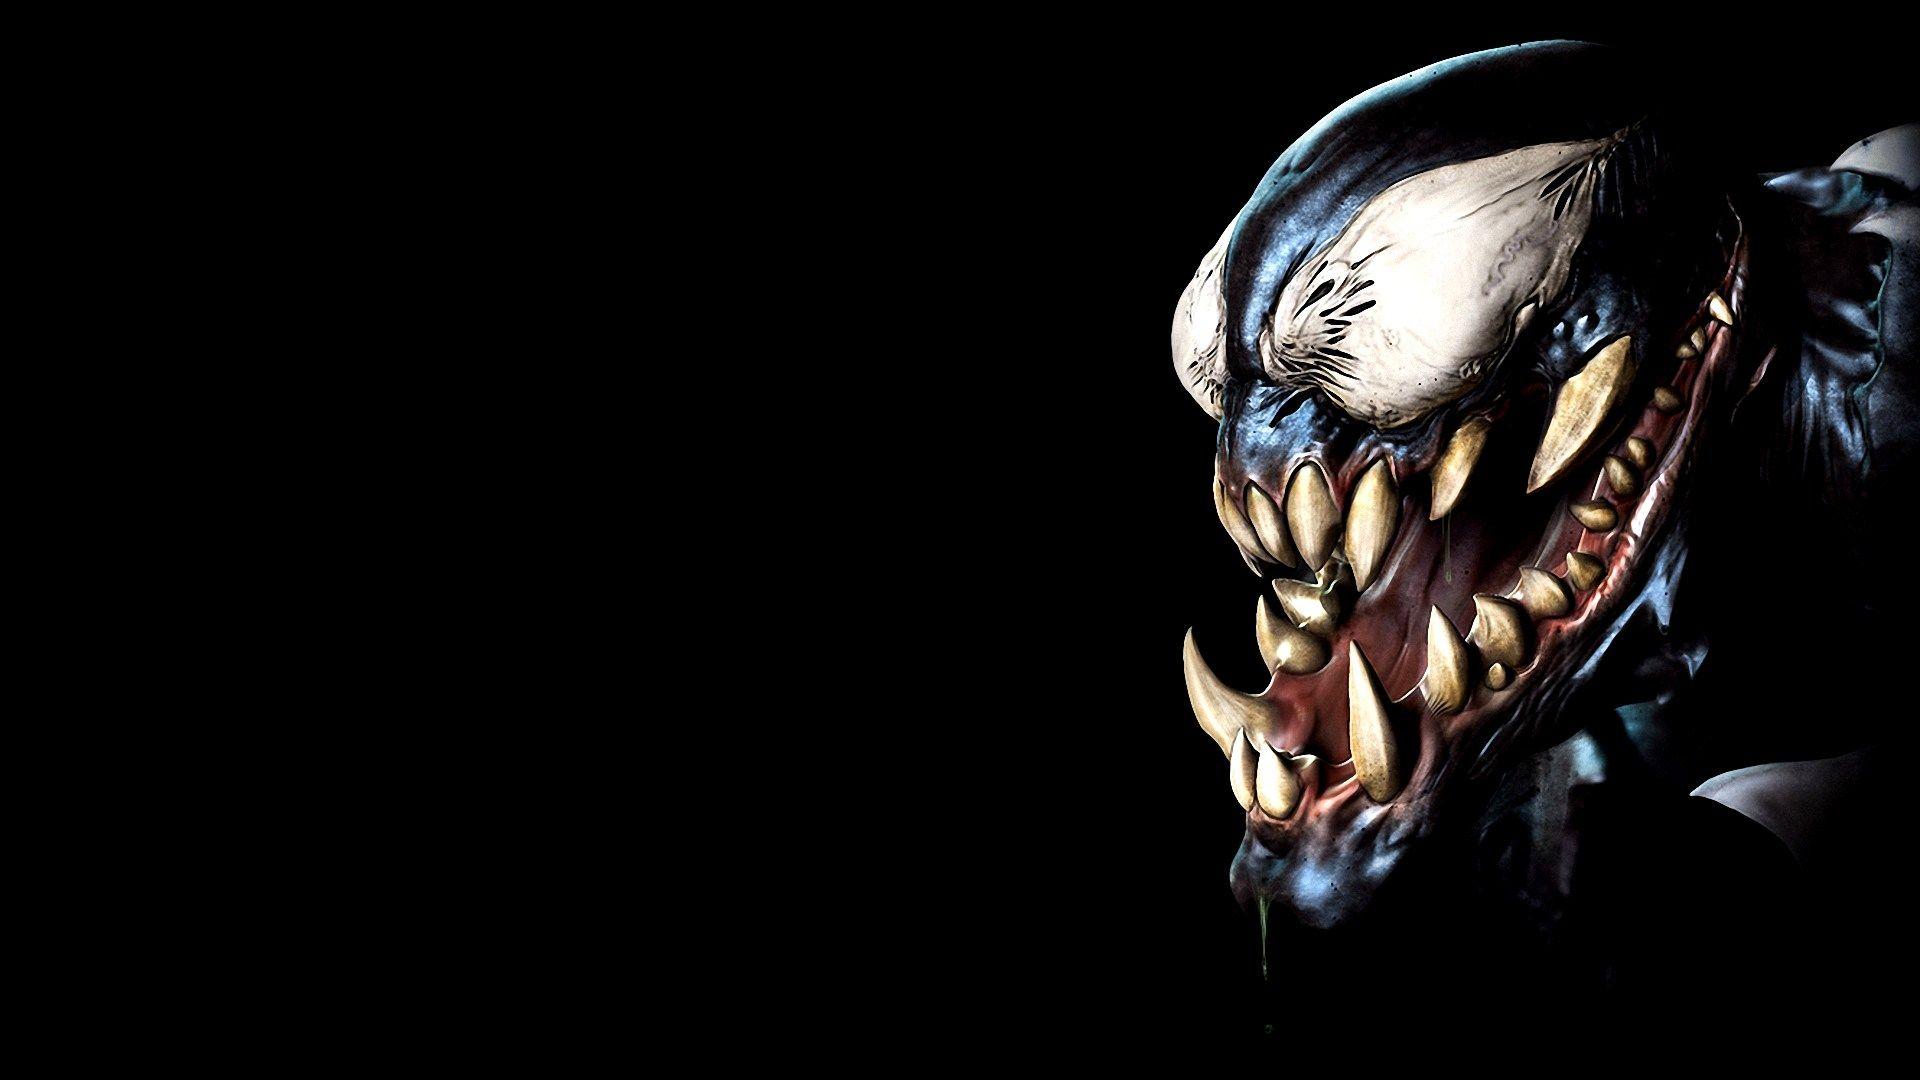 Venom HD Wallpaper for desktop download